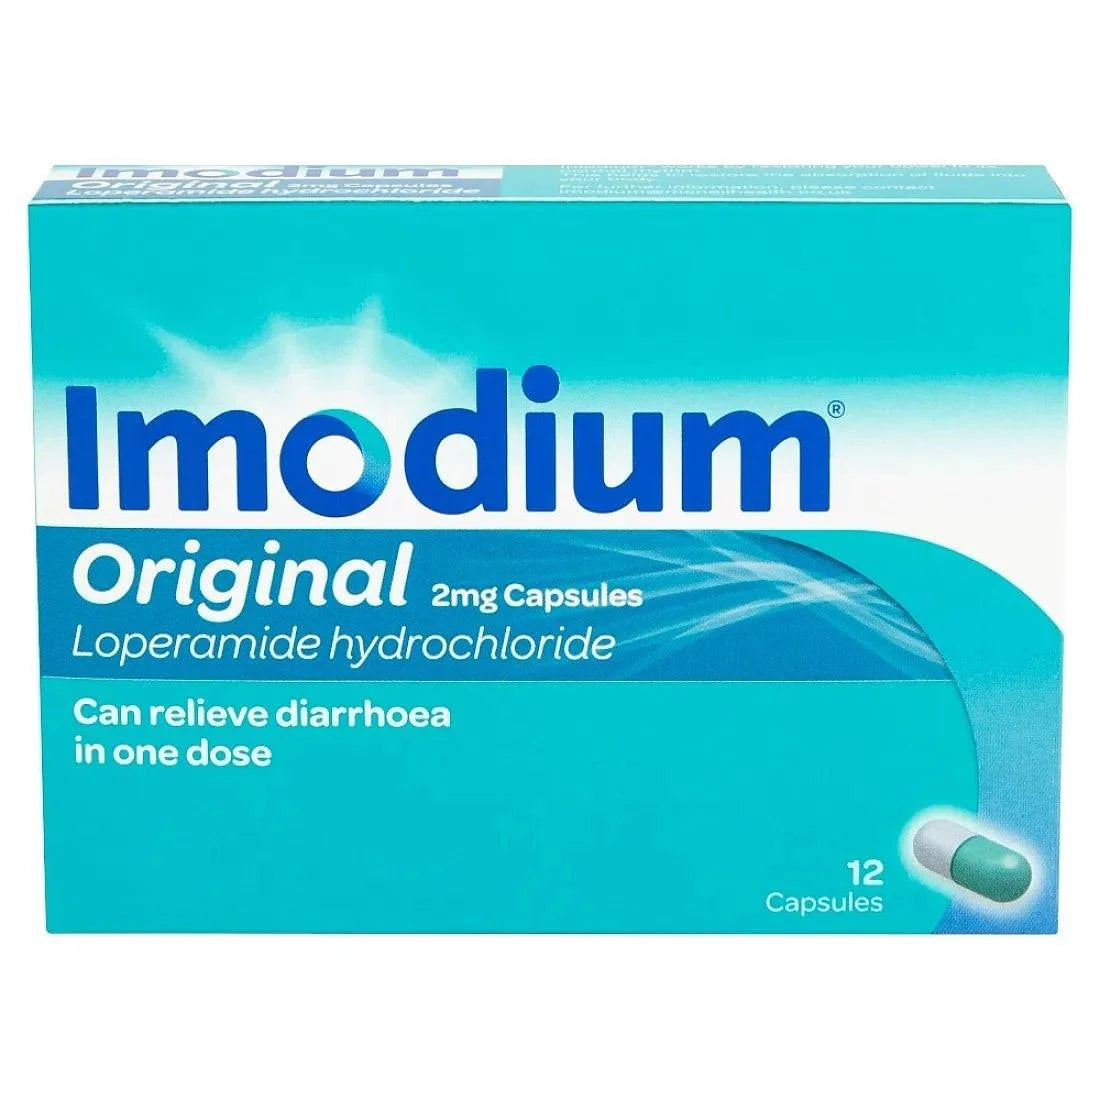 Imodium 2mg Capsules - Rightangled